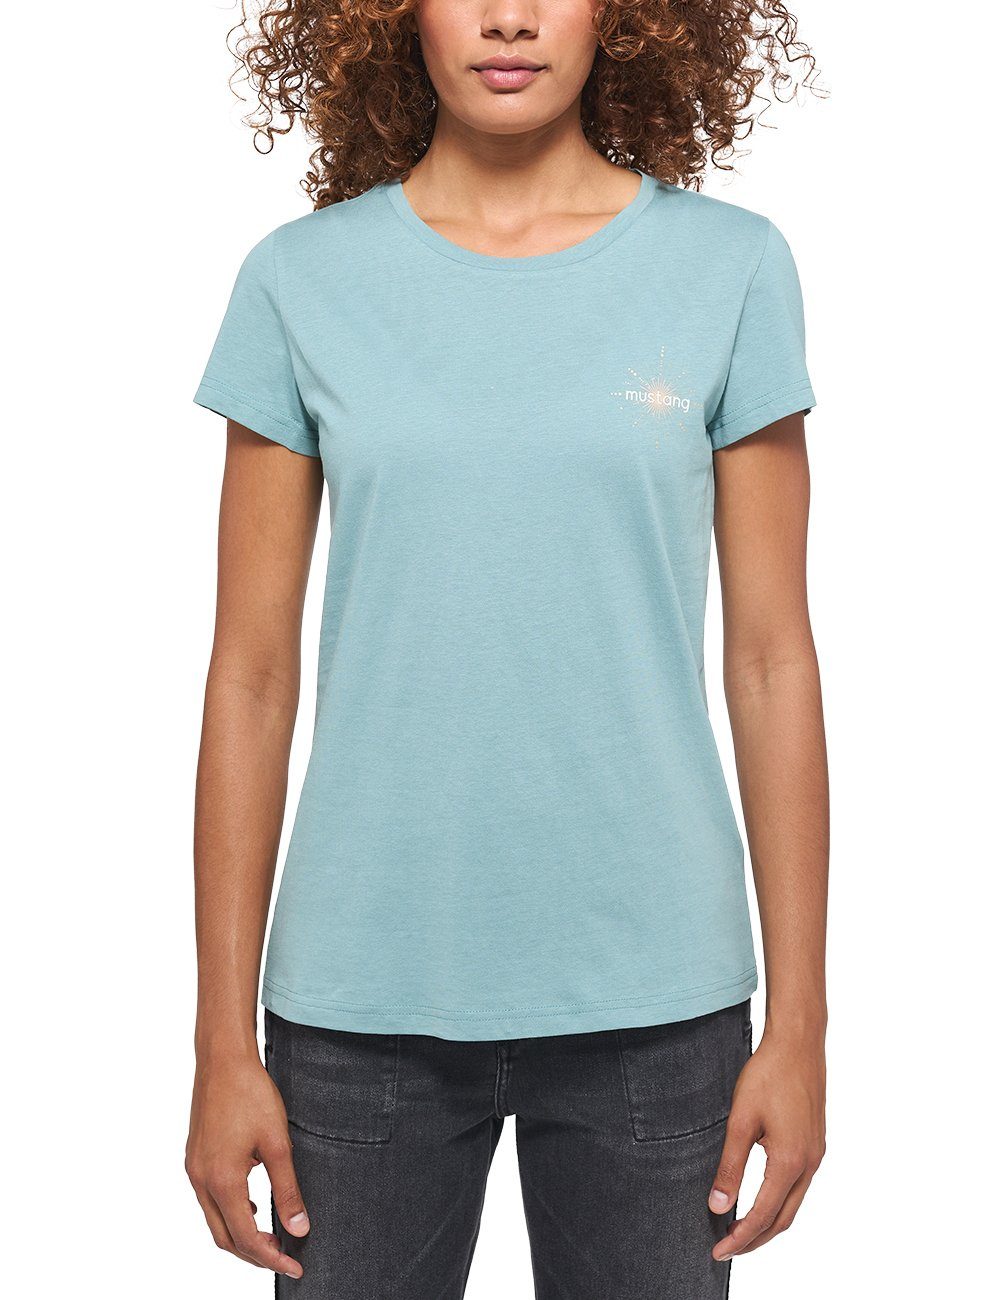 Alexia MUSTANG C T-Shirt Chestprint blau T-Shirt Style Mustang